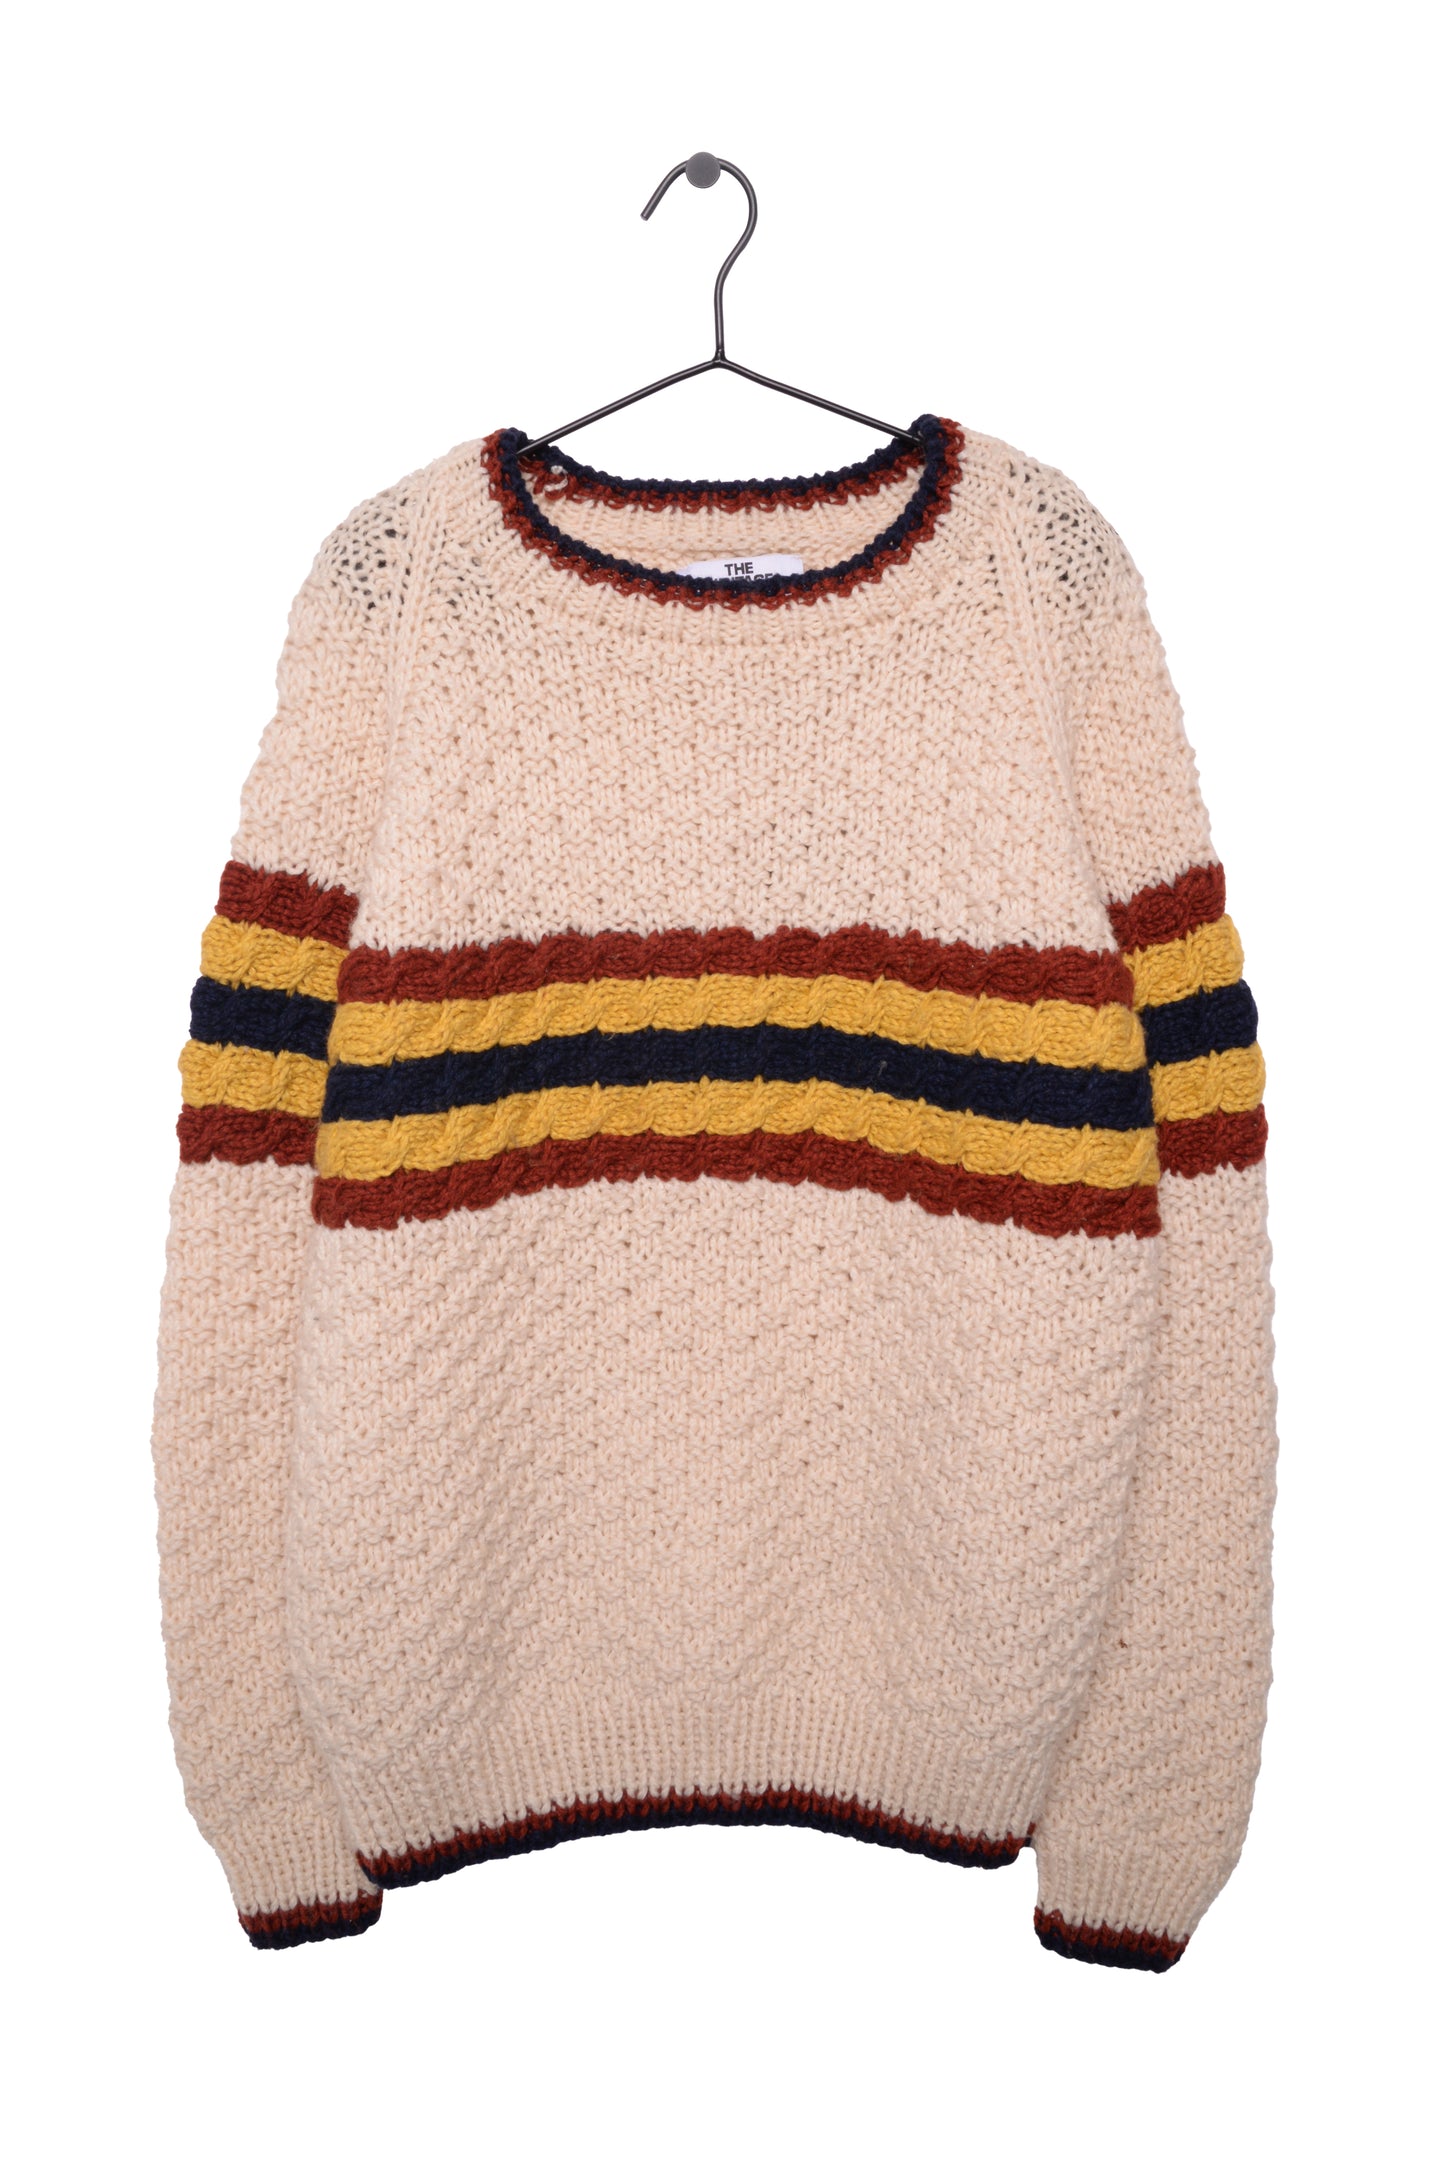 1990s Handmade Striped Sweater